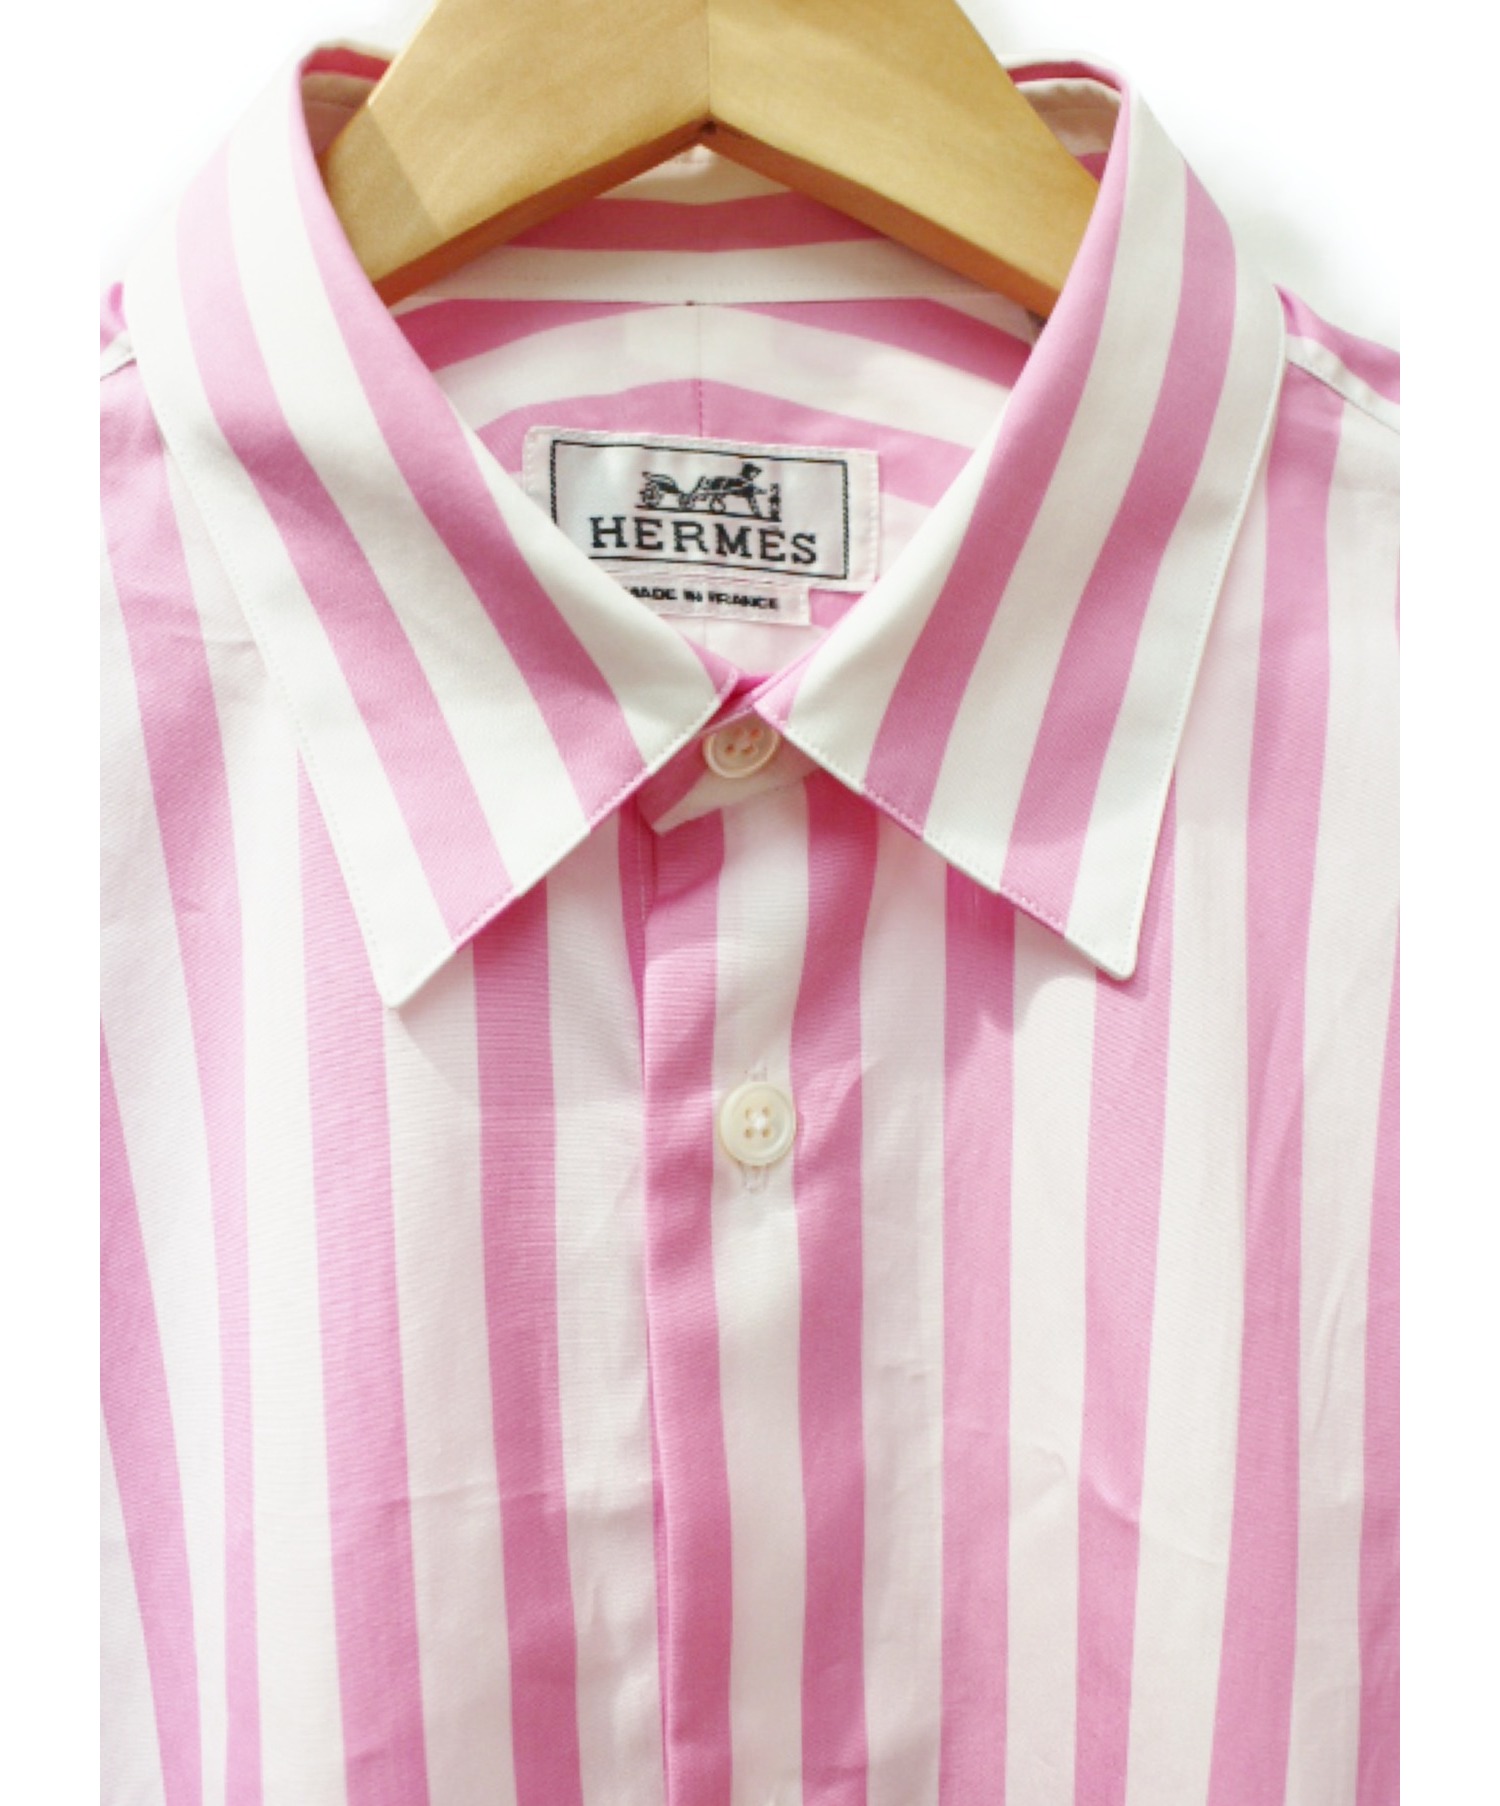 HERMES (エルメス) 20SS ストライプシャツ ピンク×ホワイト サイズ:38